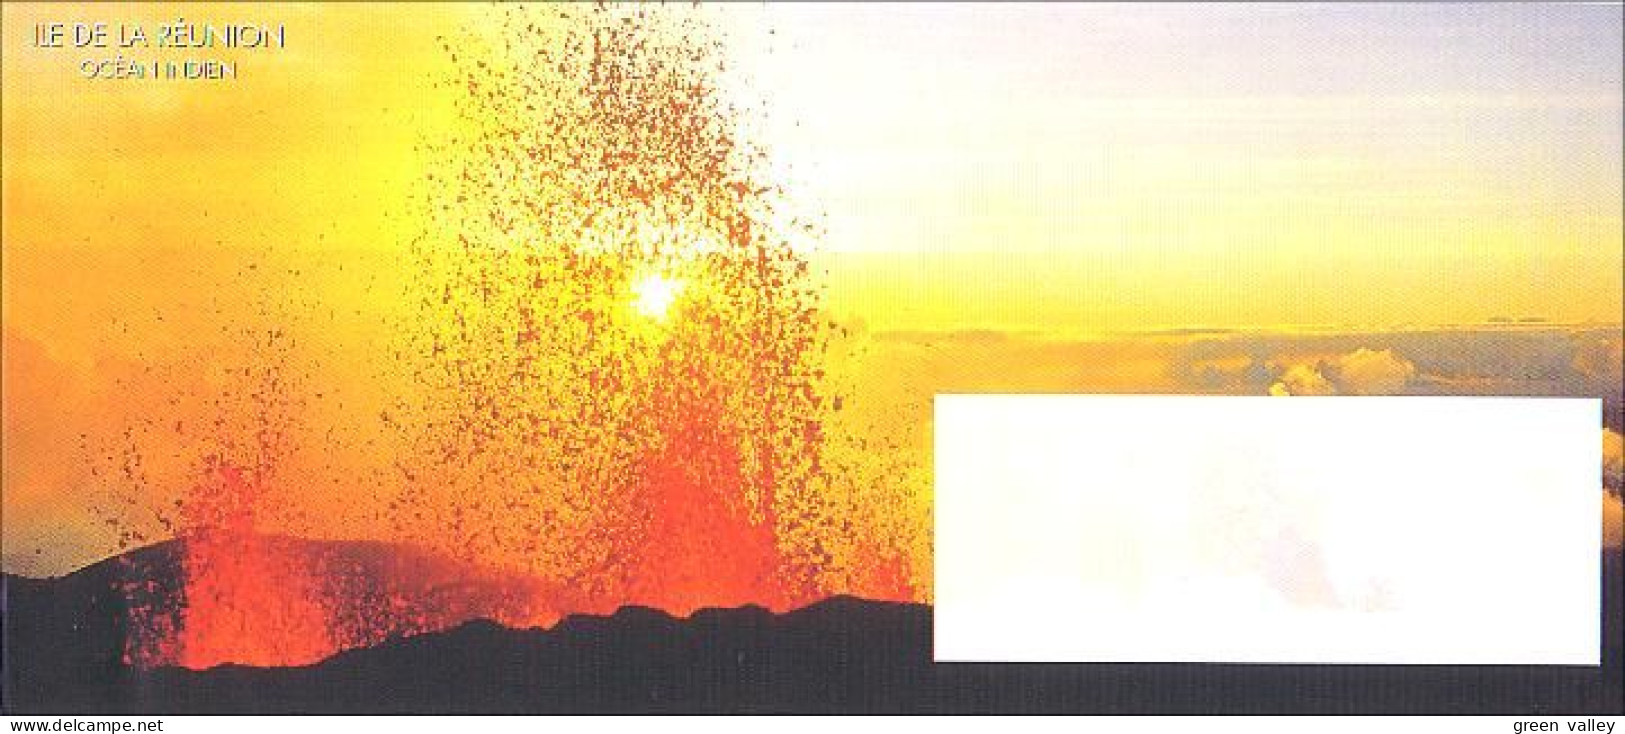 Réunion Enveloppe Illustree Eruption Volcan Volcano Preprinted Cover FDC Cover ( A80 934) - Volcanos